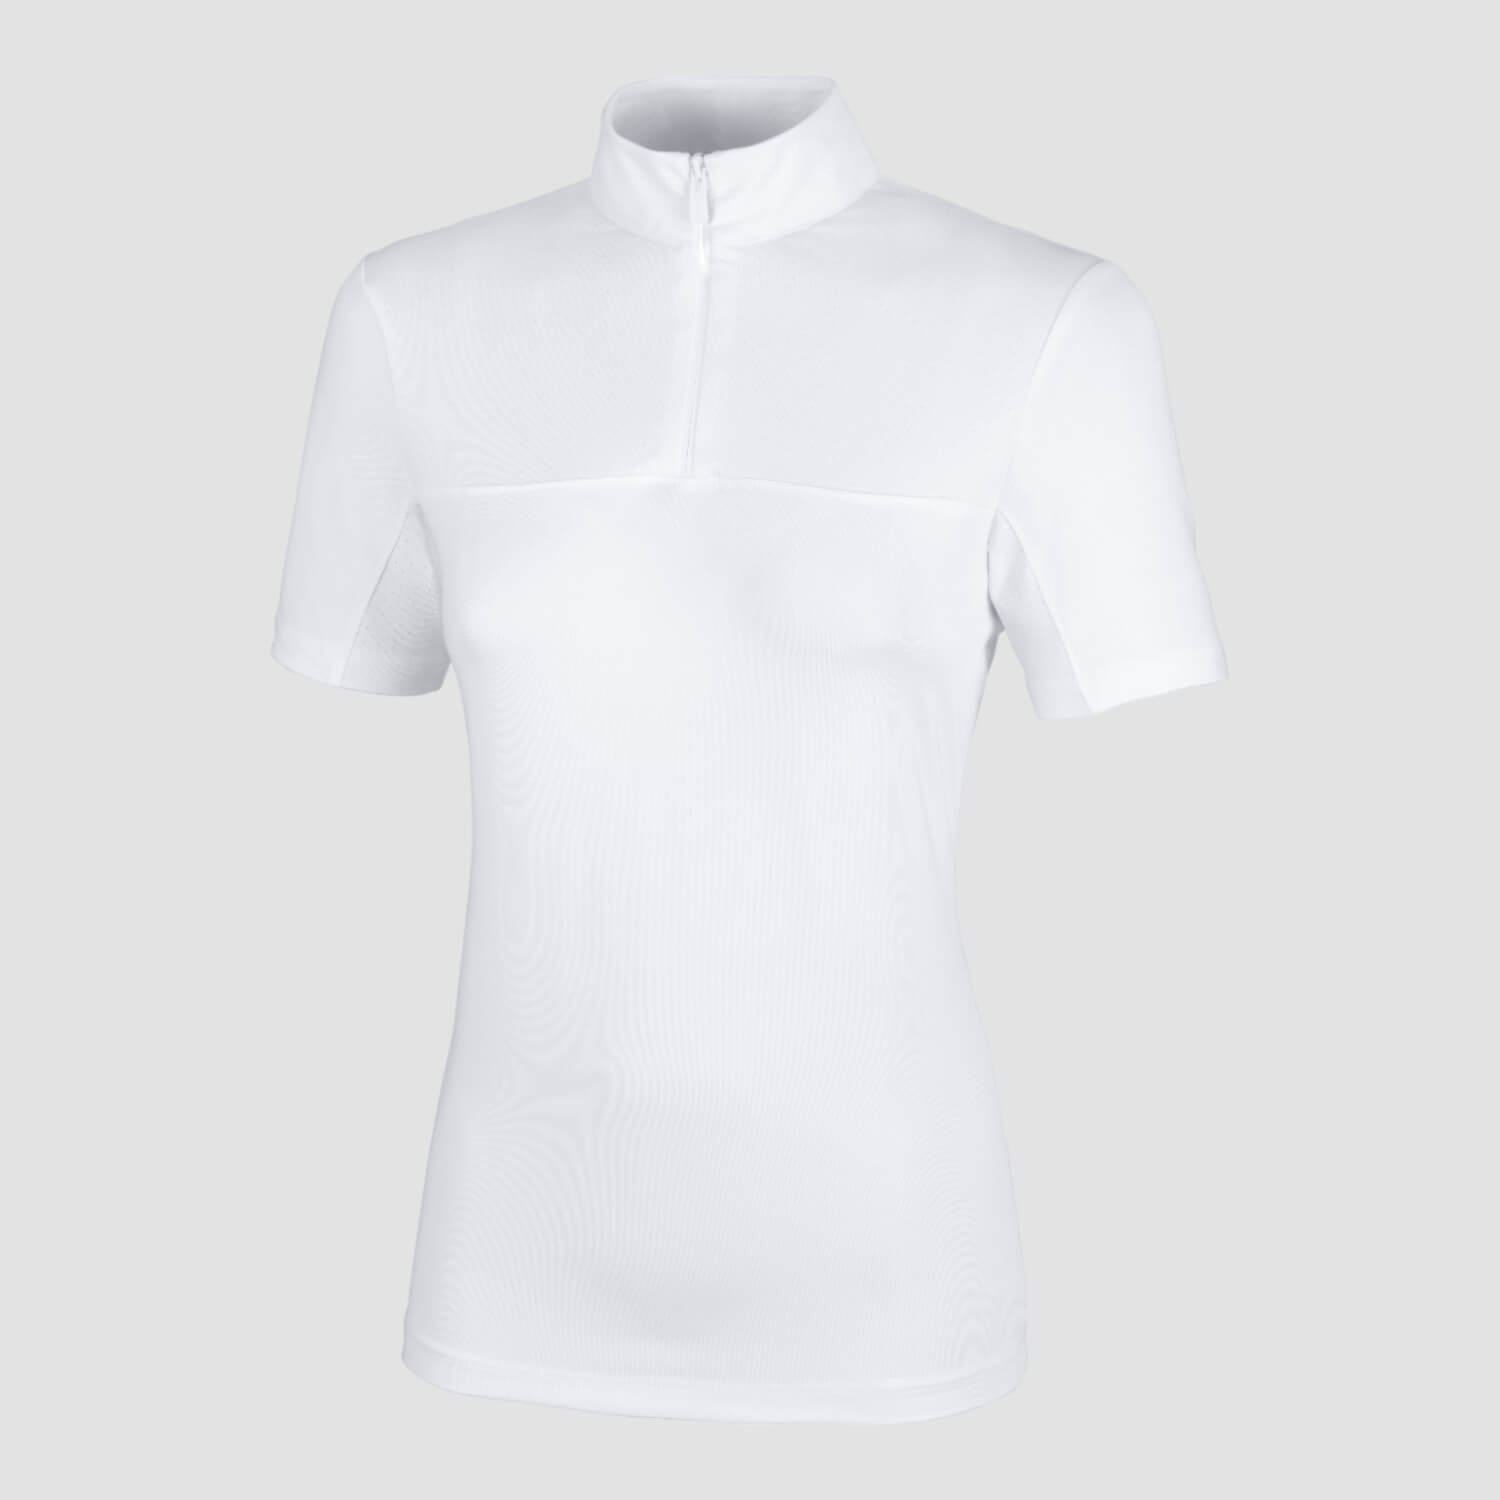 Pikeur Lasercut Shirt White 5231 Sports